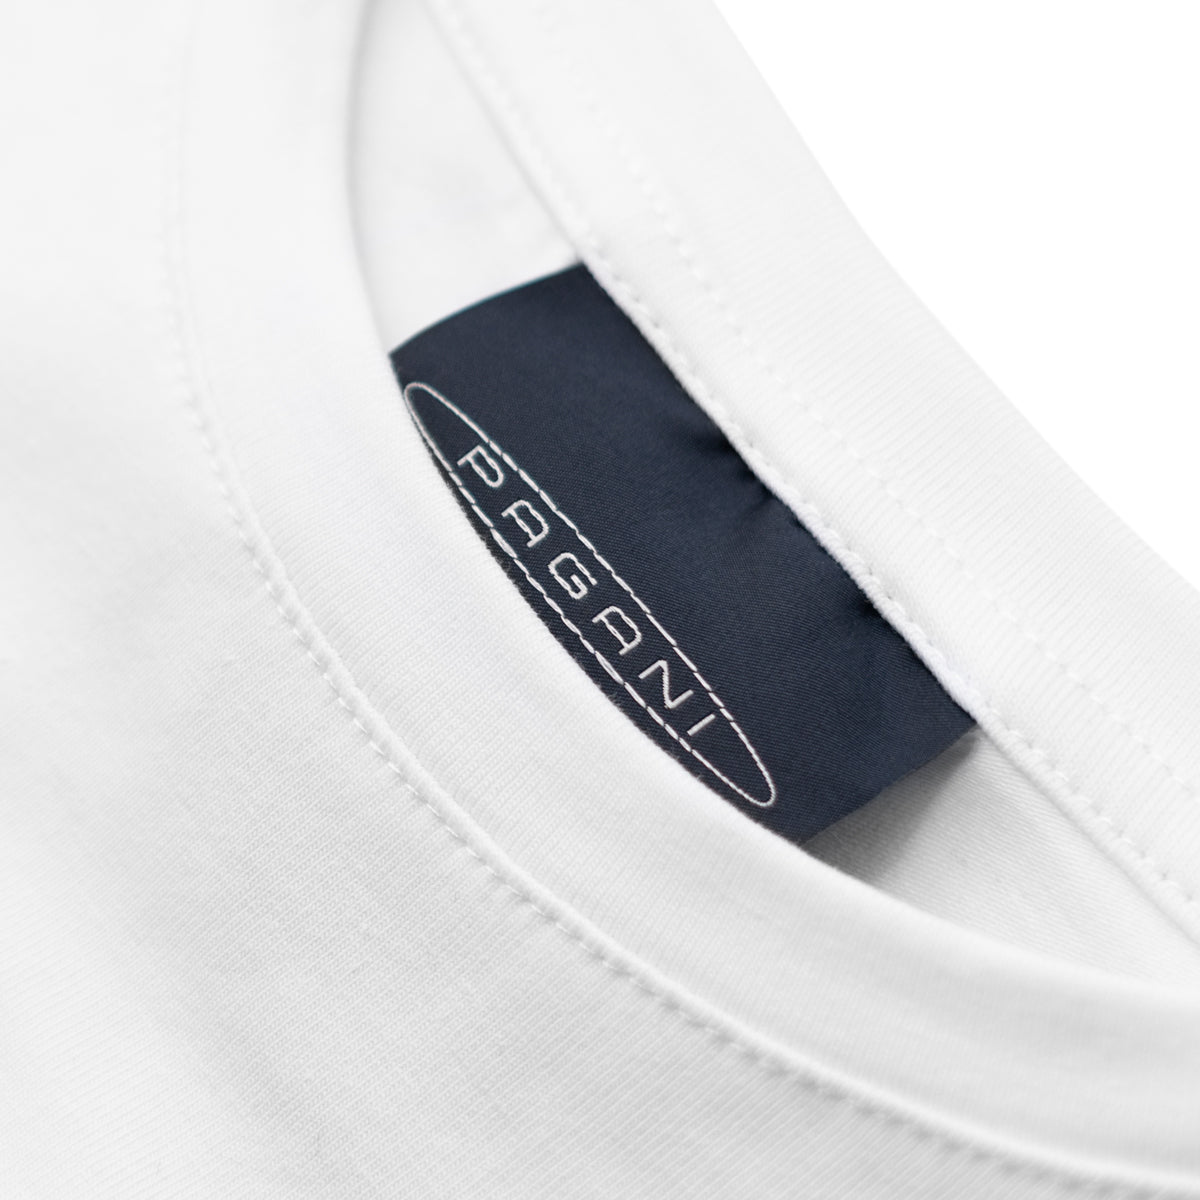 Men's basic t-shirt white | Team Collection